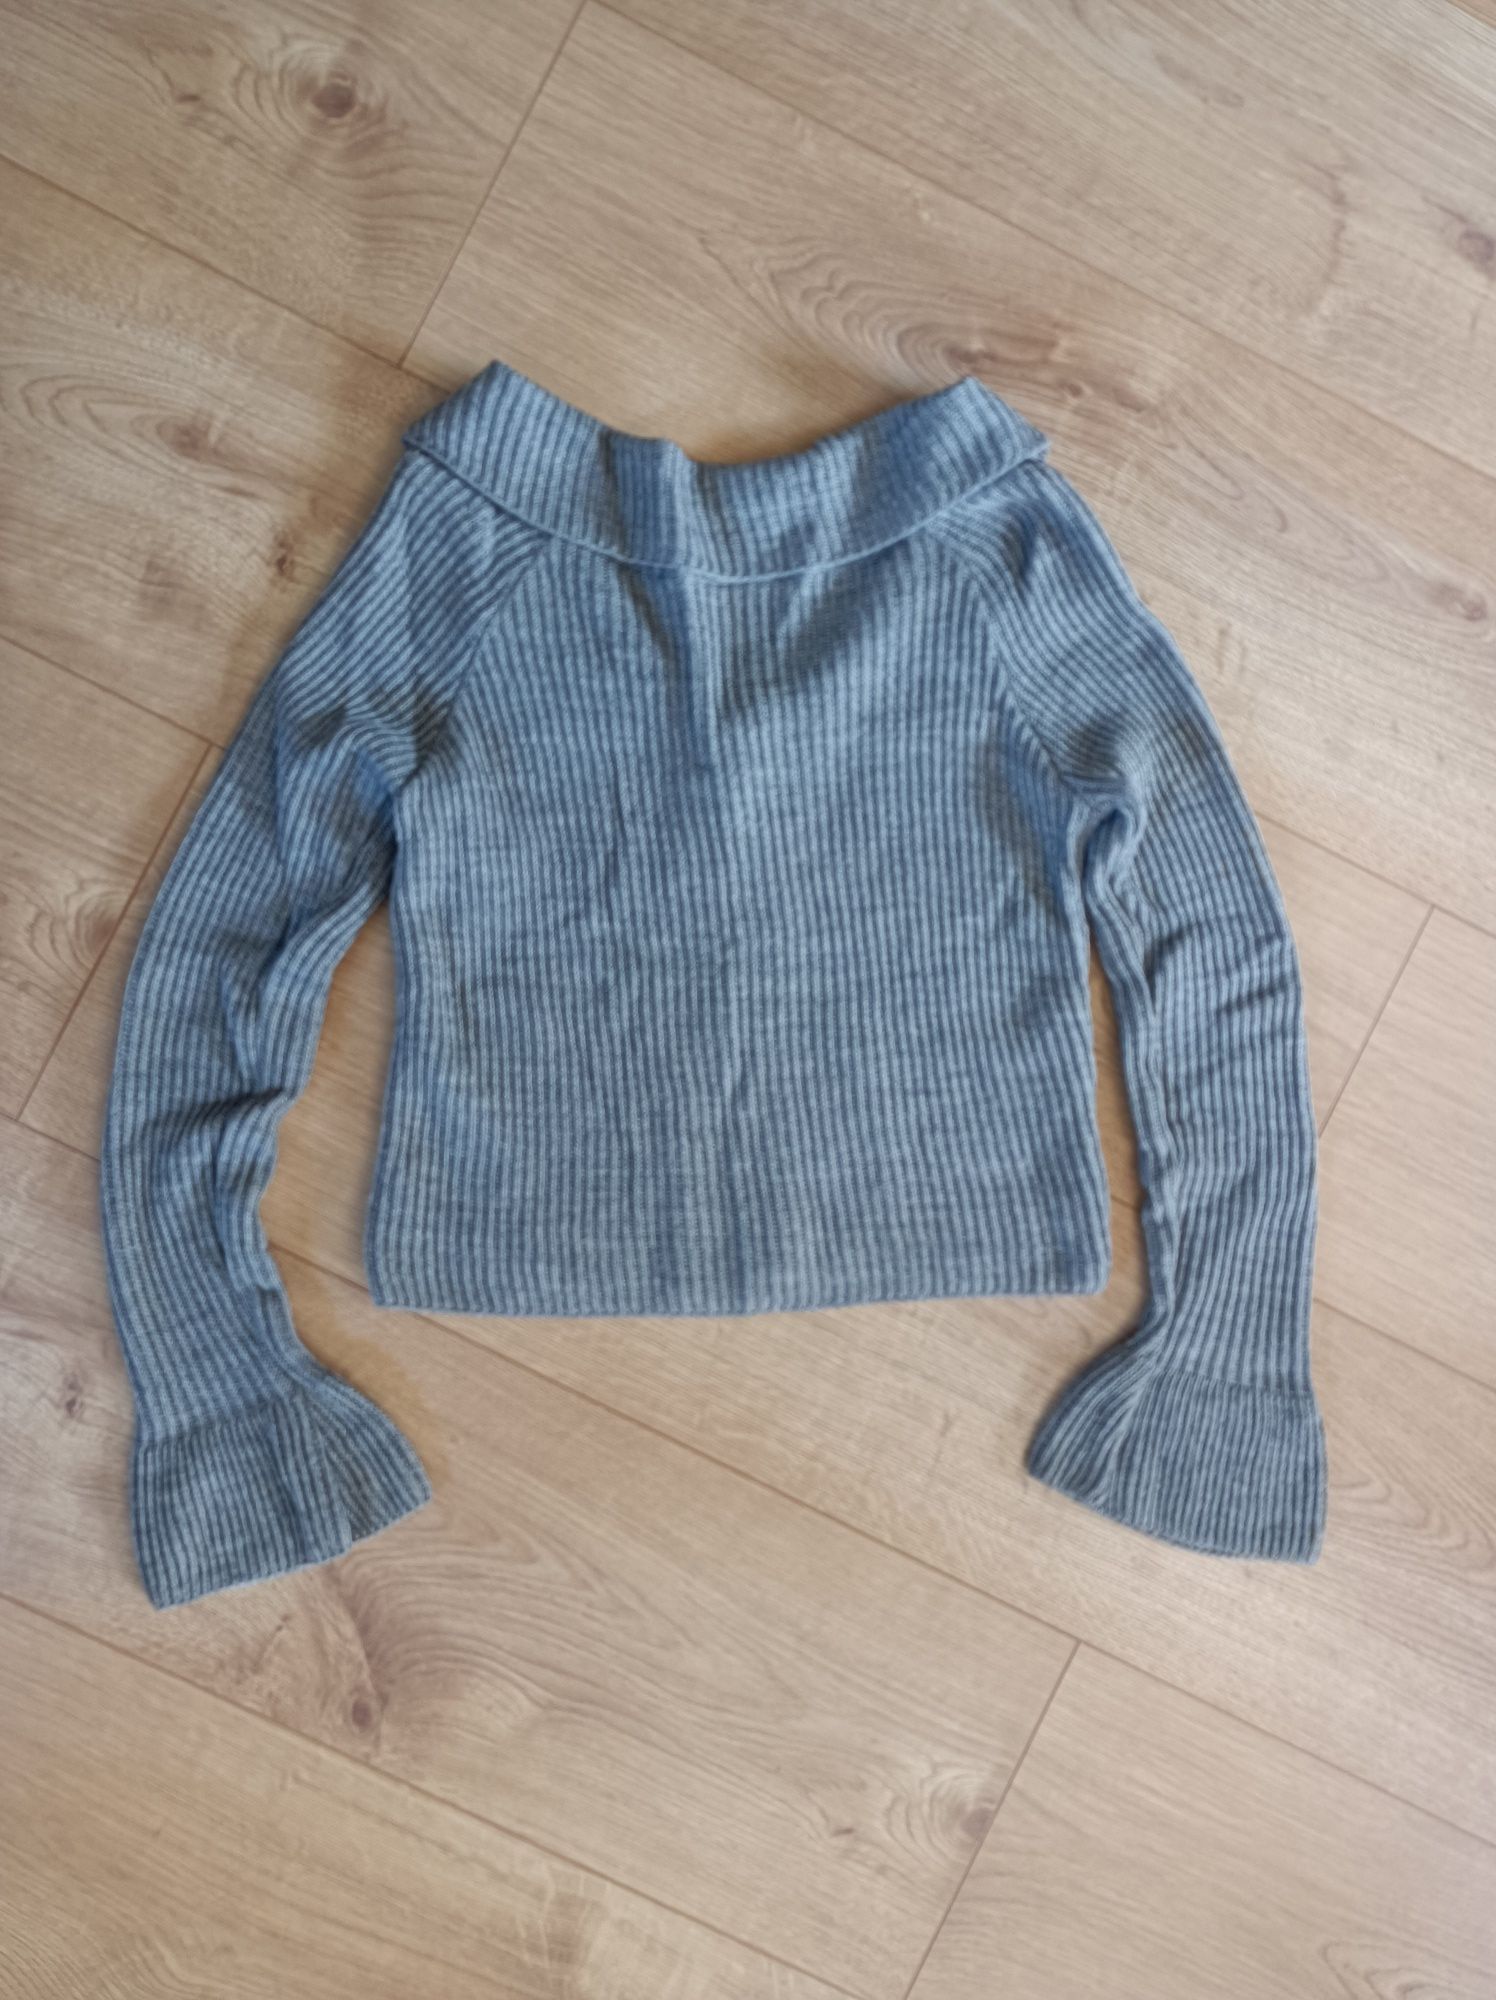 Szary sweter sweterek damski narzutka bolerko rozmiar 36-38